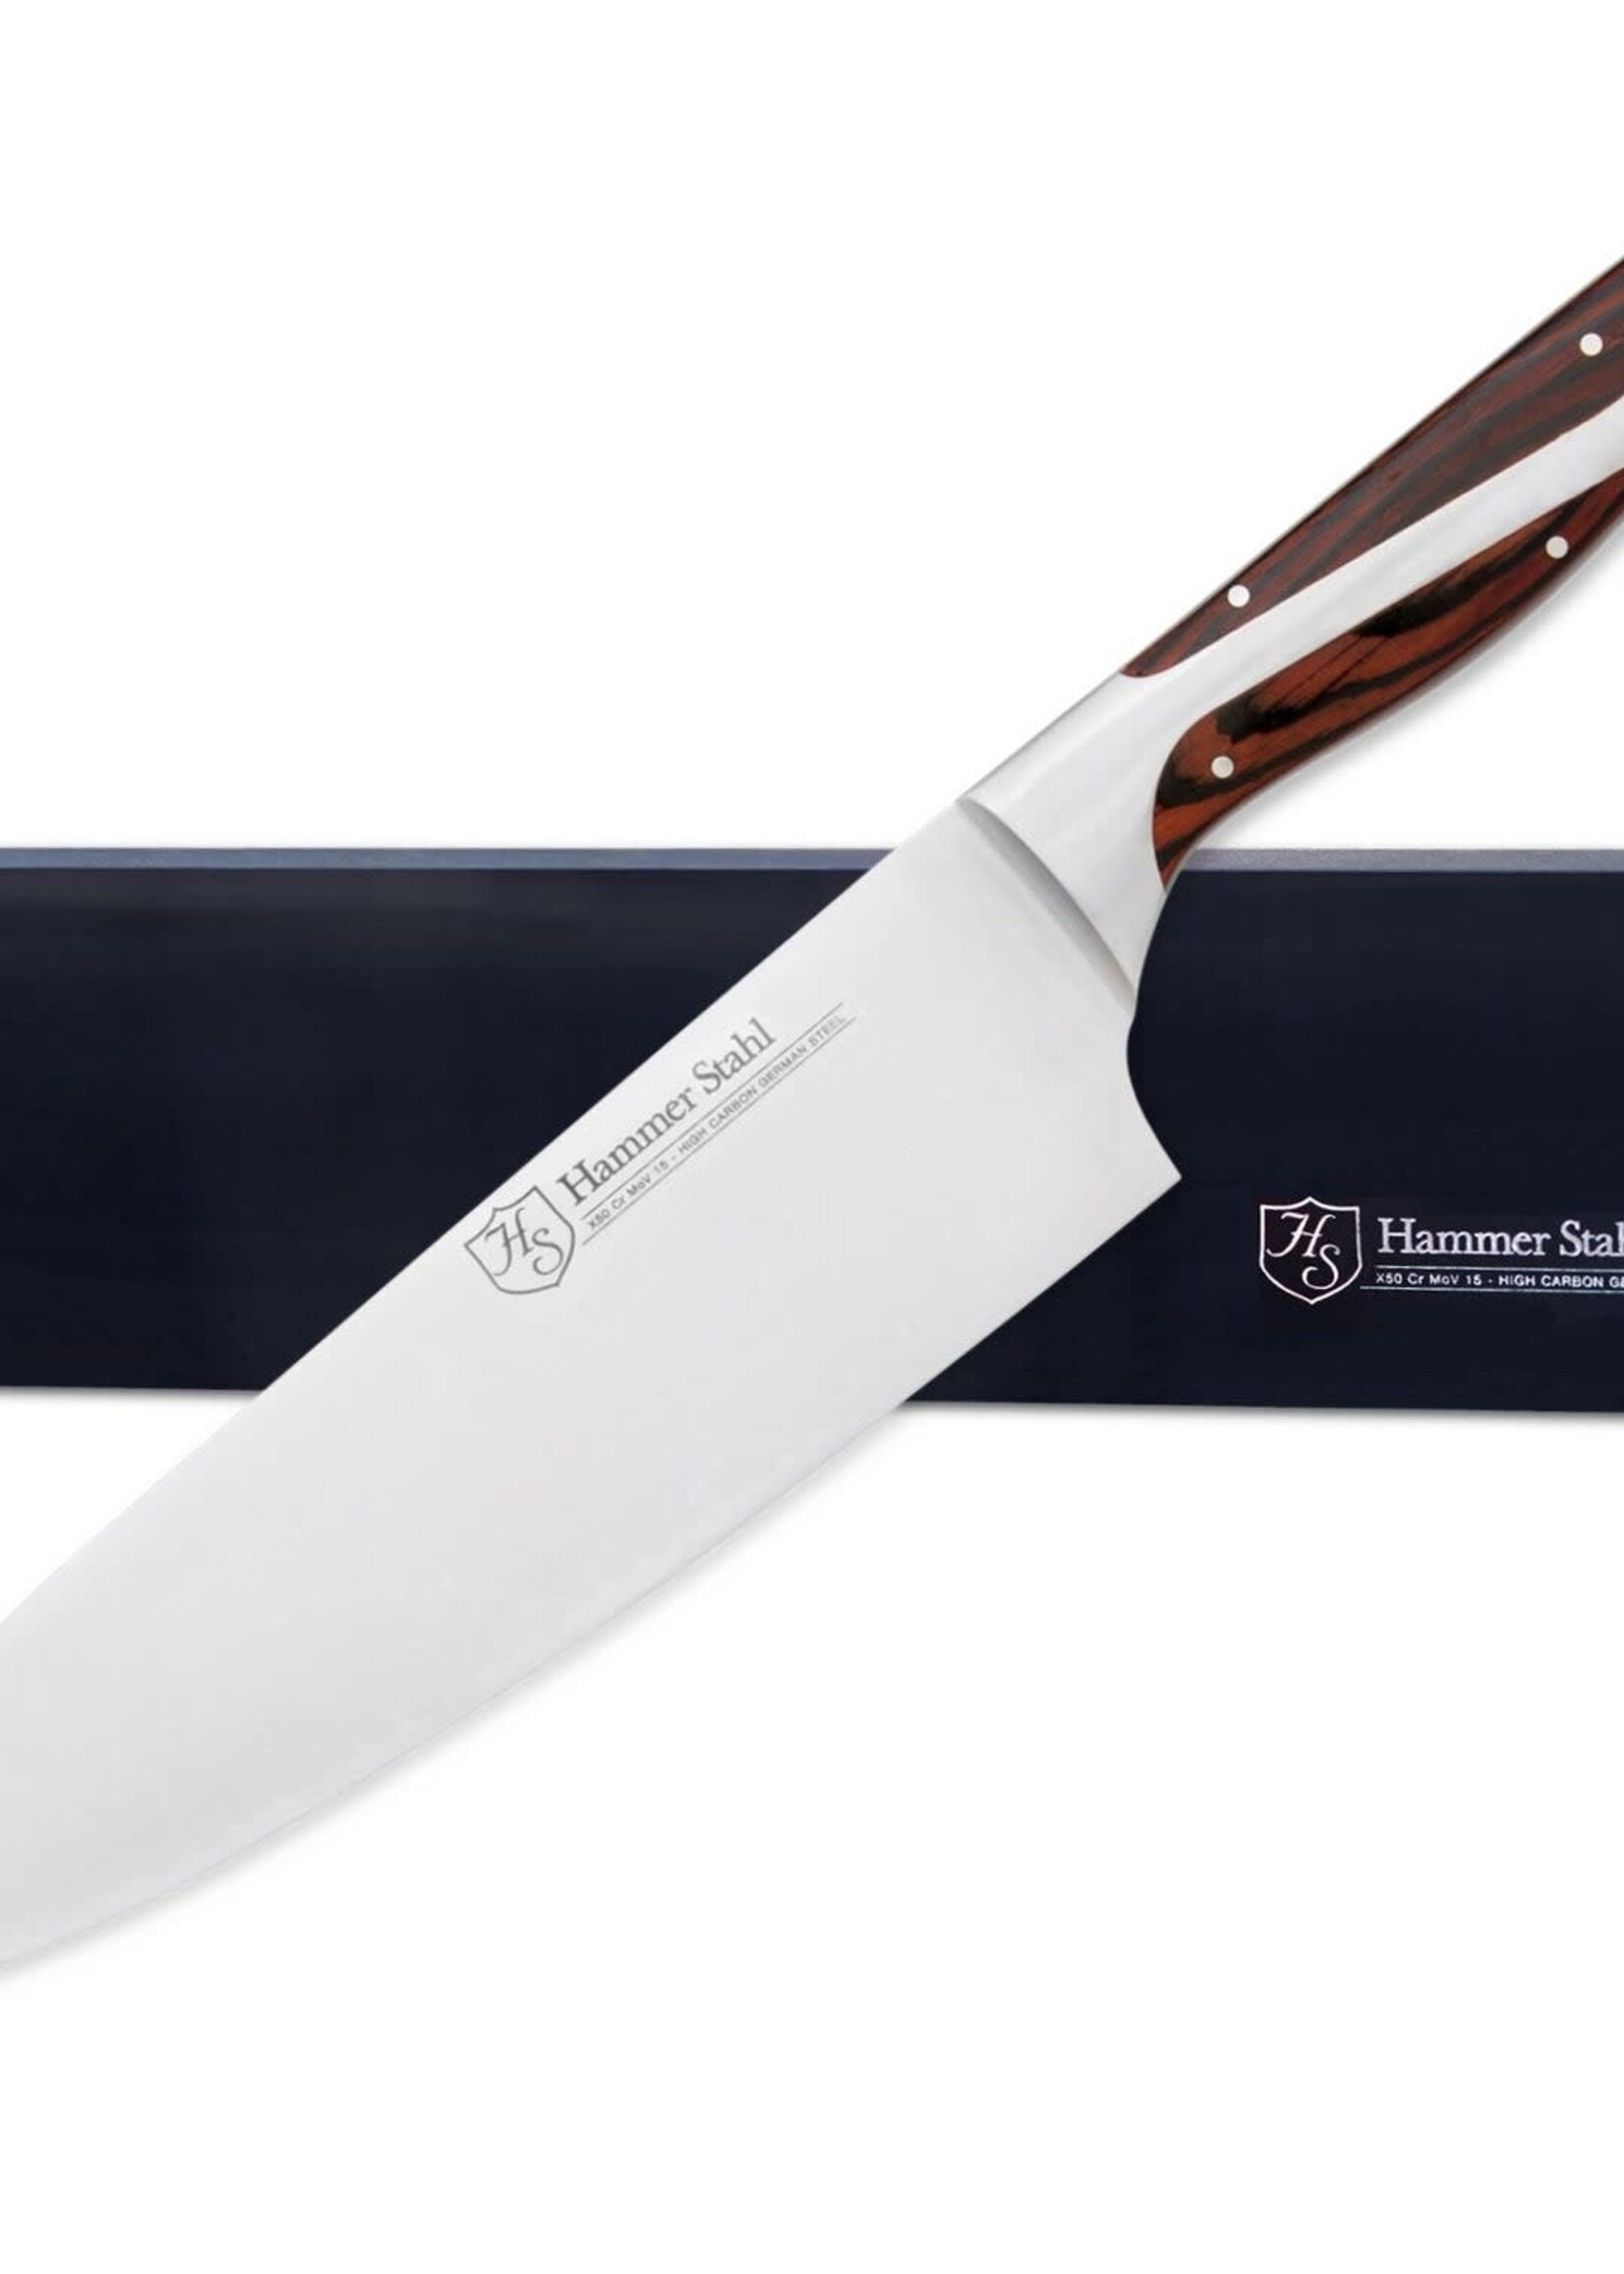 Hammerstahl Heritage Steel 8" Chef Knife